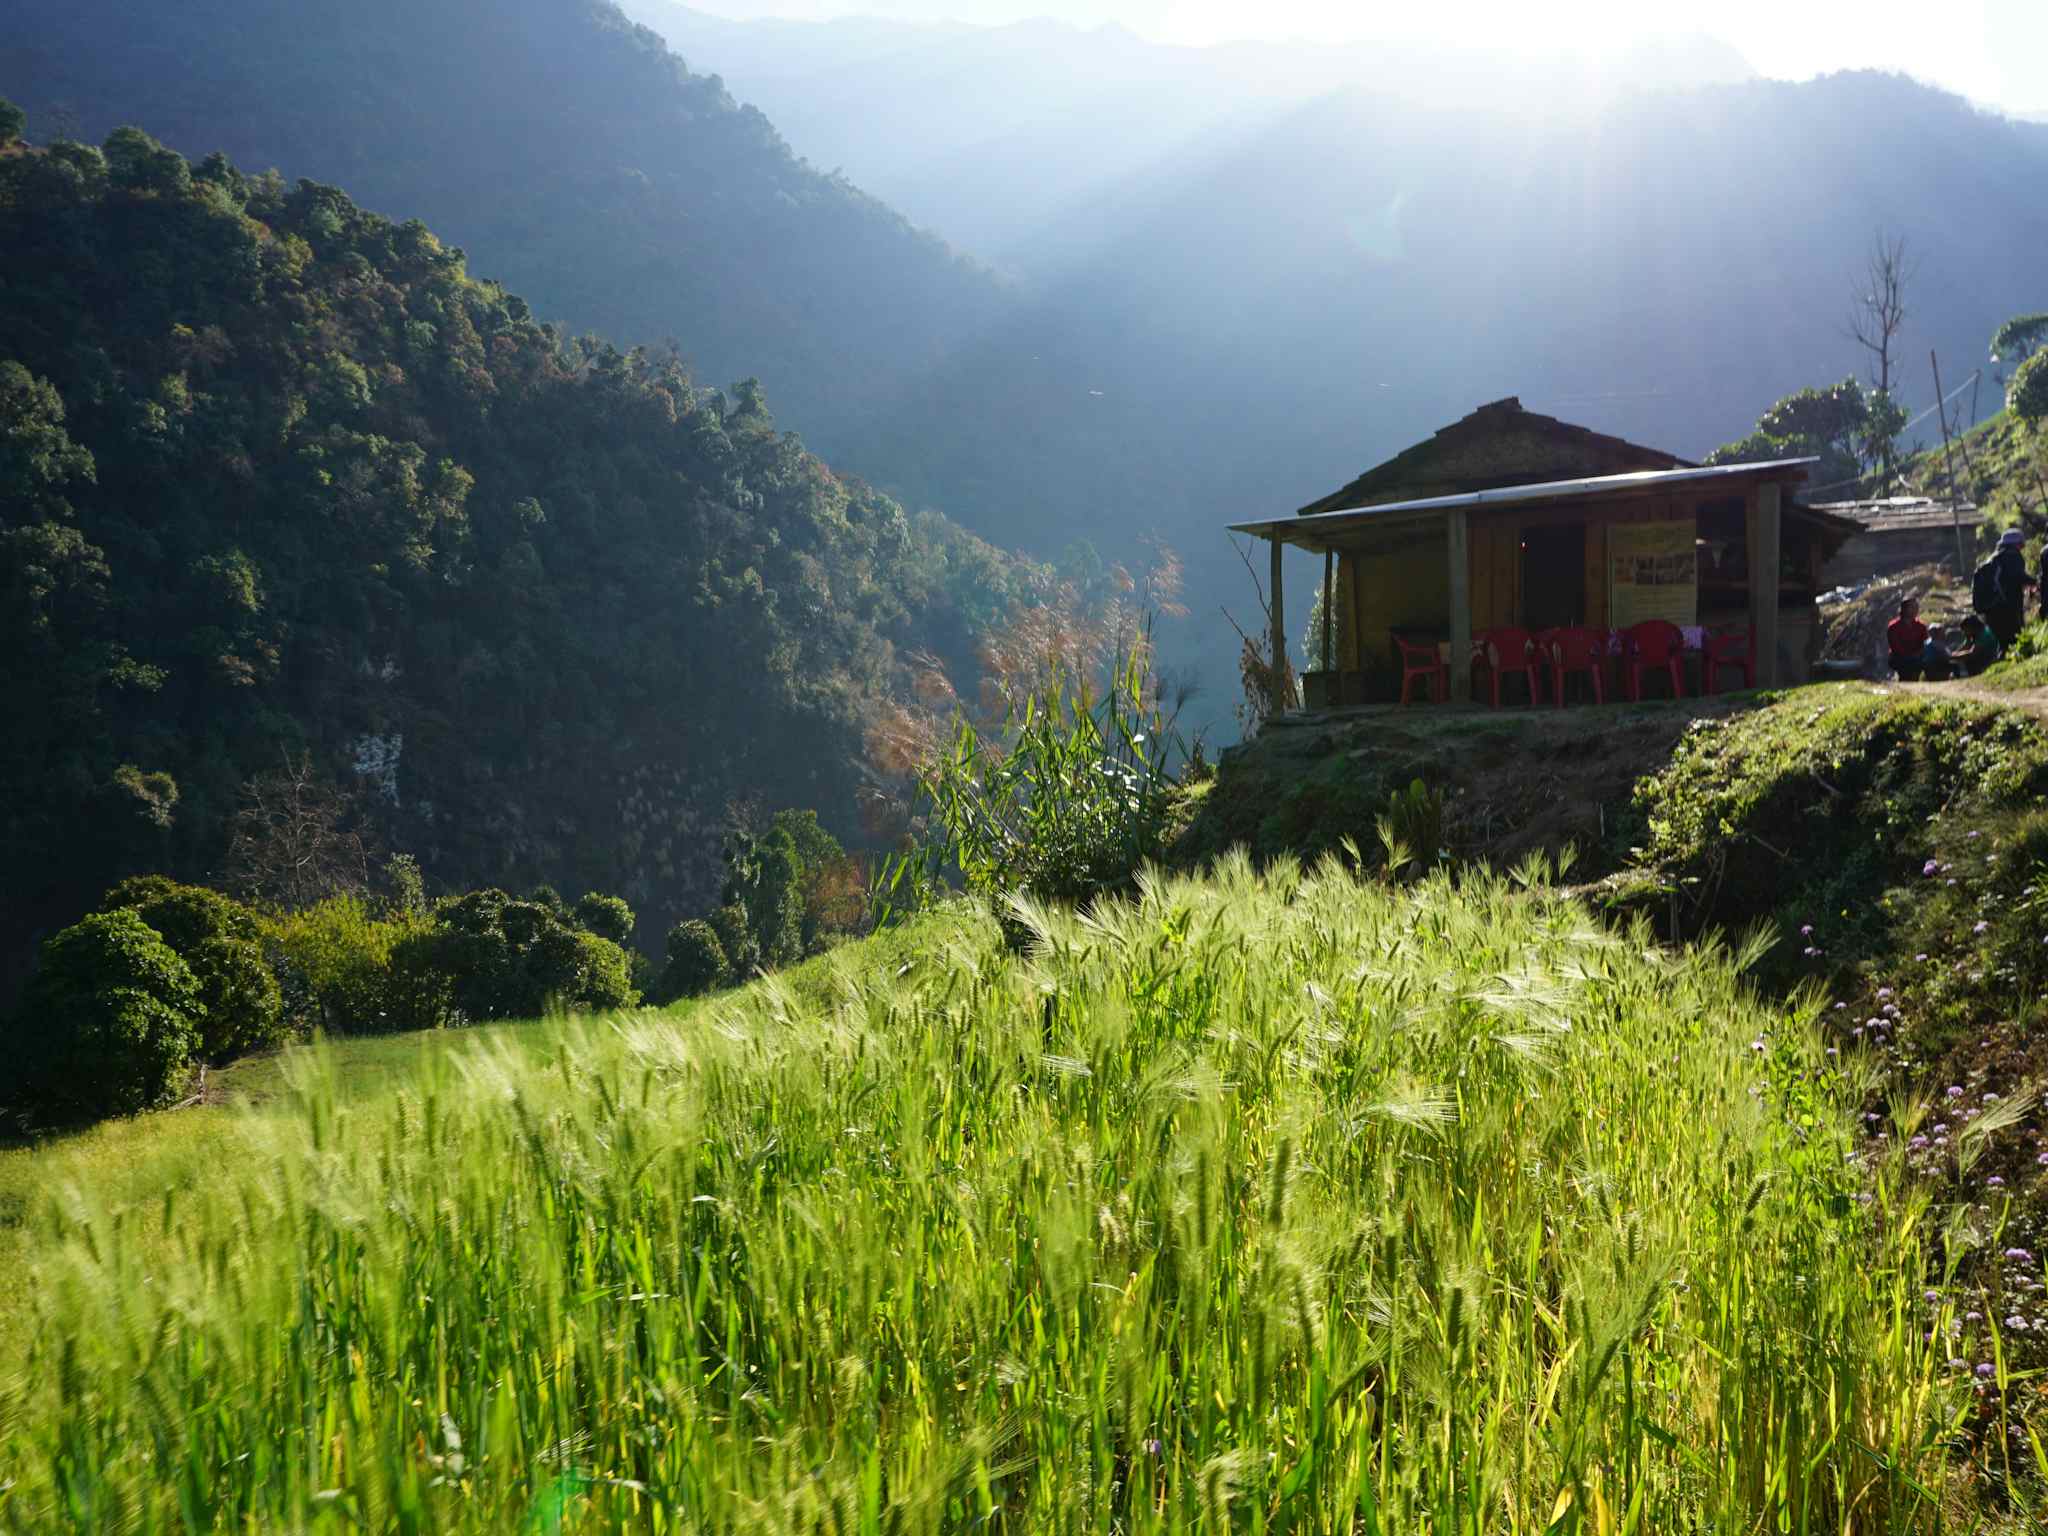 Chhetra Khola, Nepal. Photo: Host/Freedom Adventures